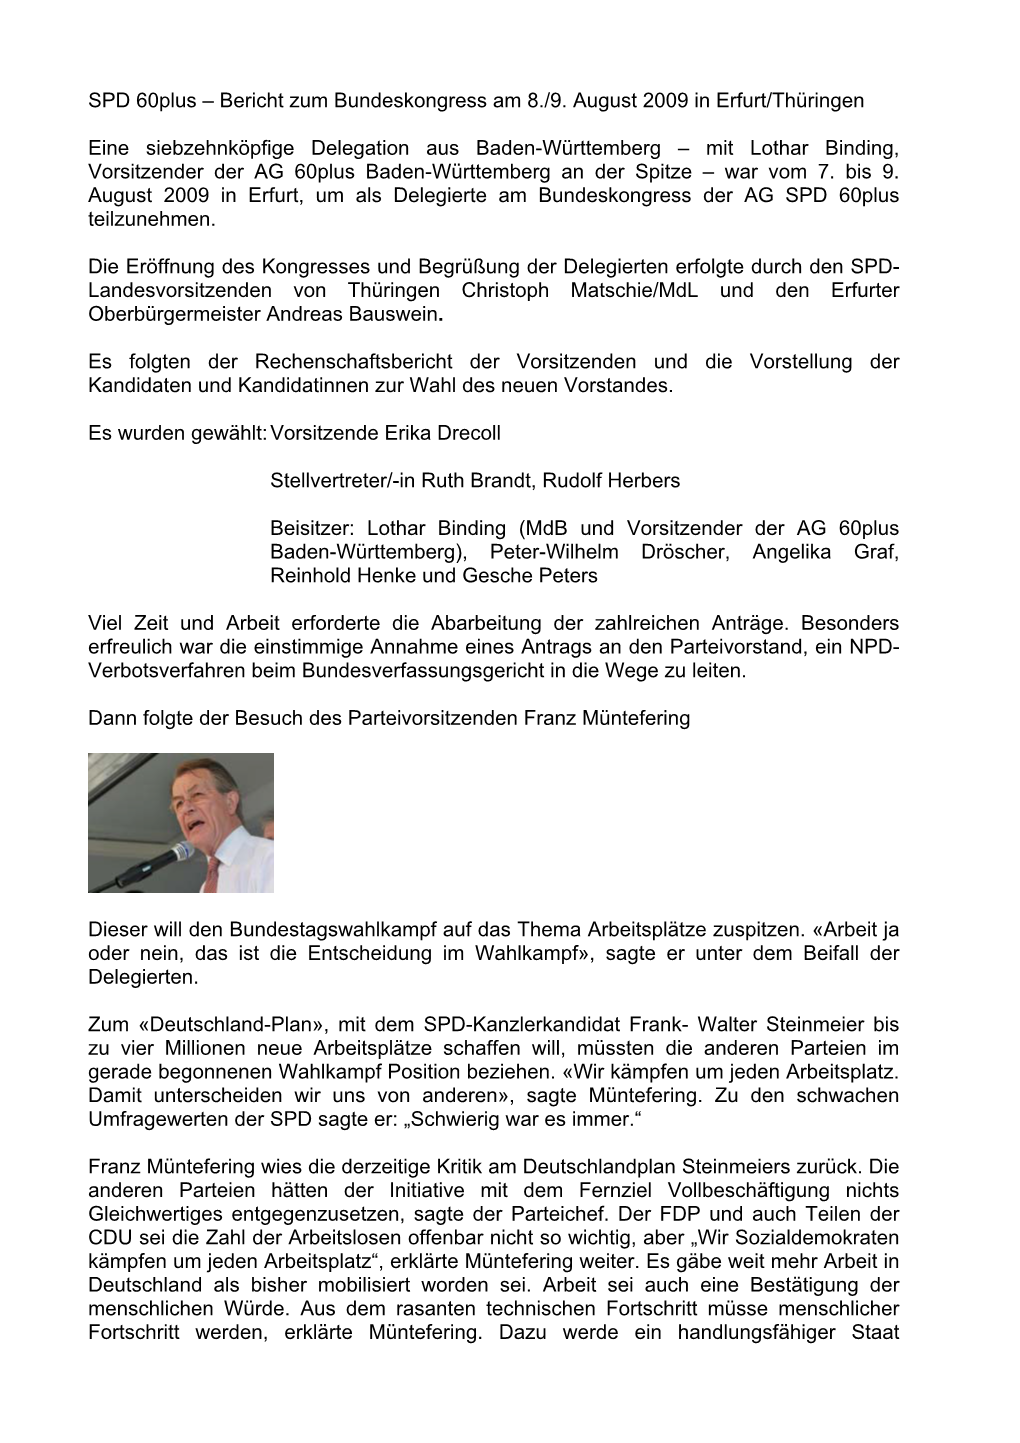 SPD 60Plus – Bericht Zum Bundeskongress Am 8./9. August 2009 in Erfurt/Thüringen